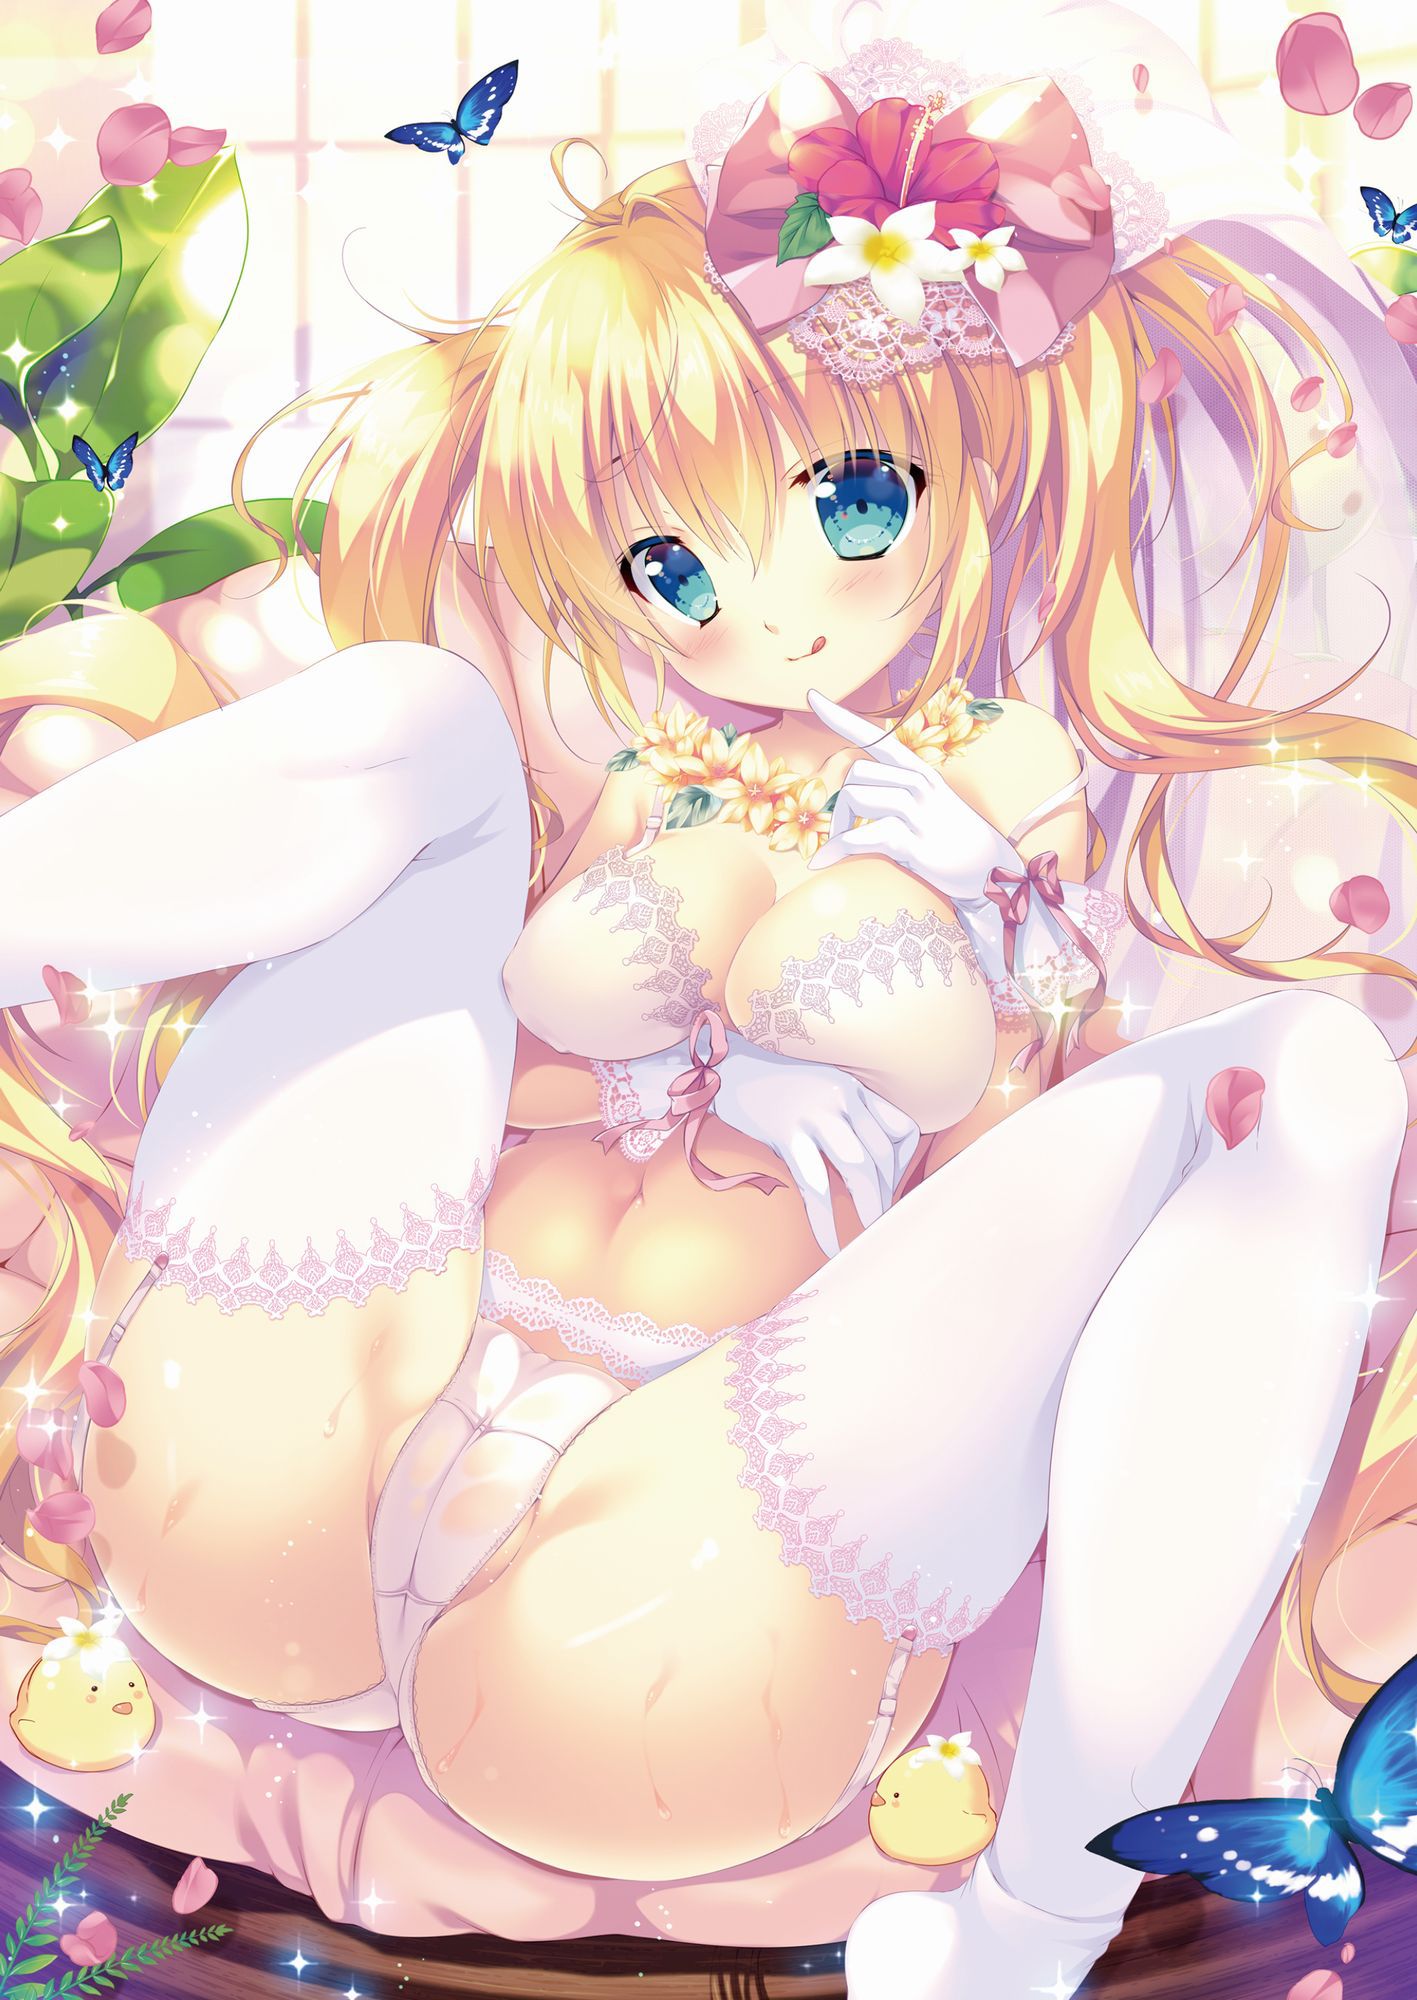 【Erotic Anime Summary】 Erotic image of a creepy girl wearing white pure white underwear 【Secondary erotic】 8